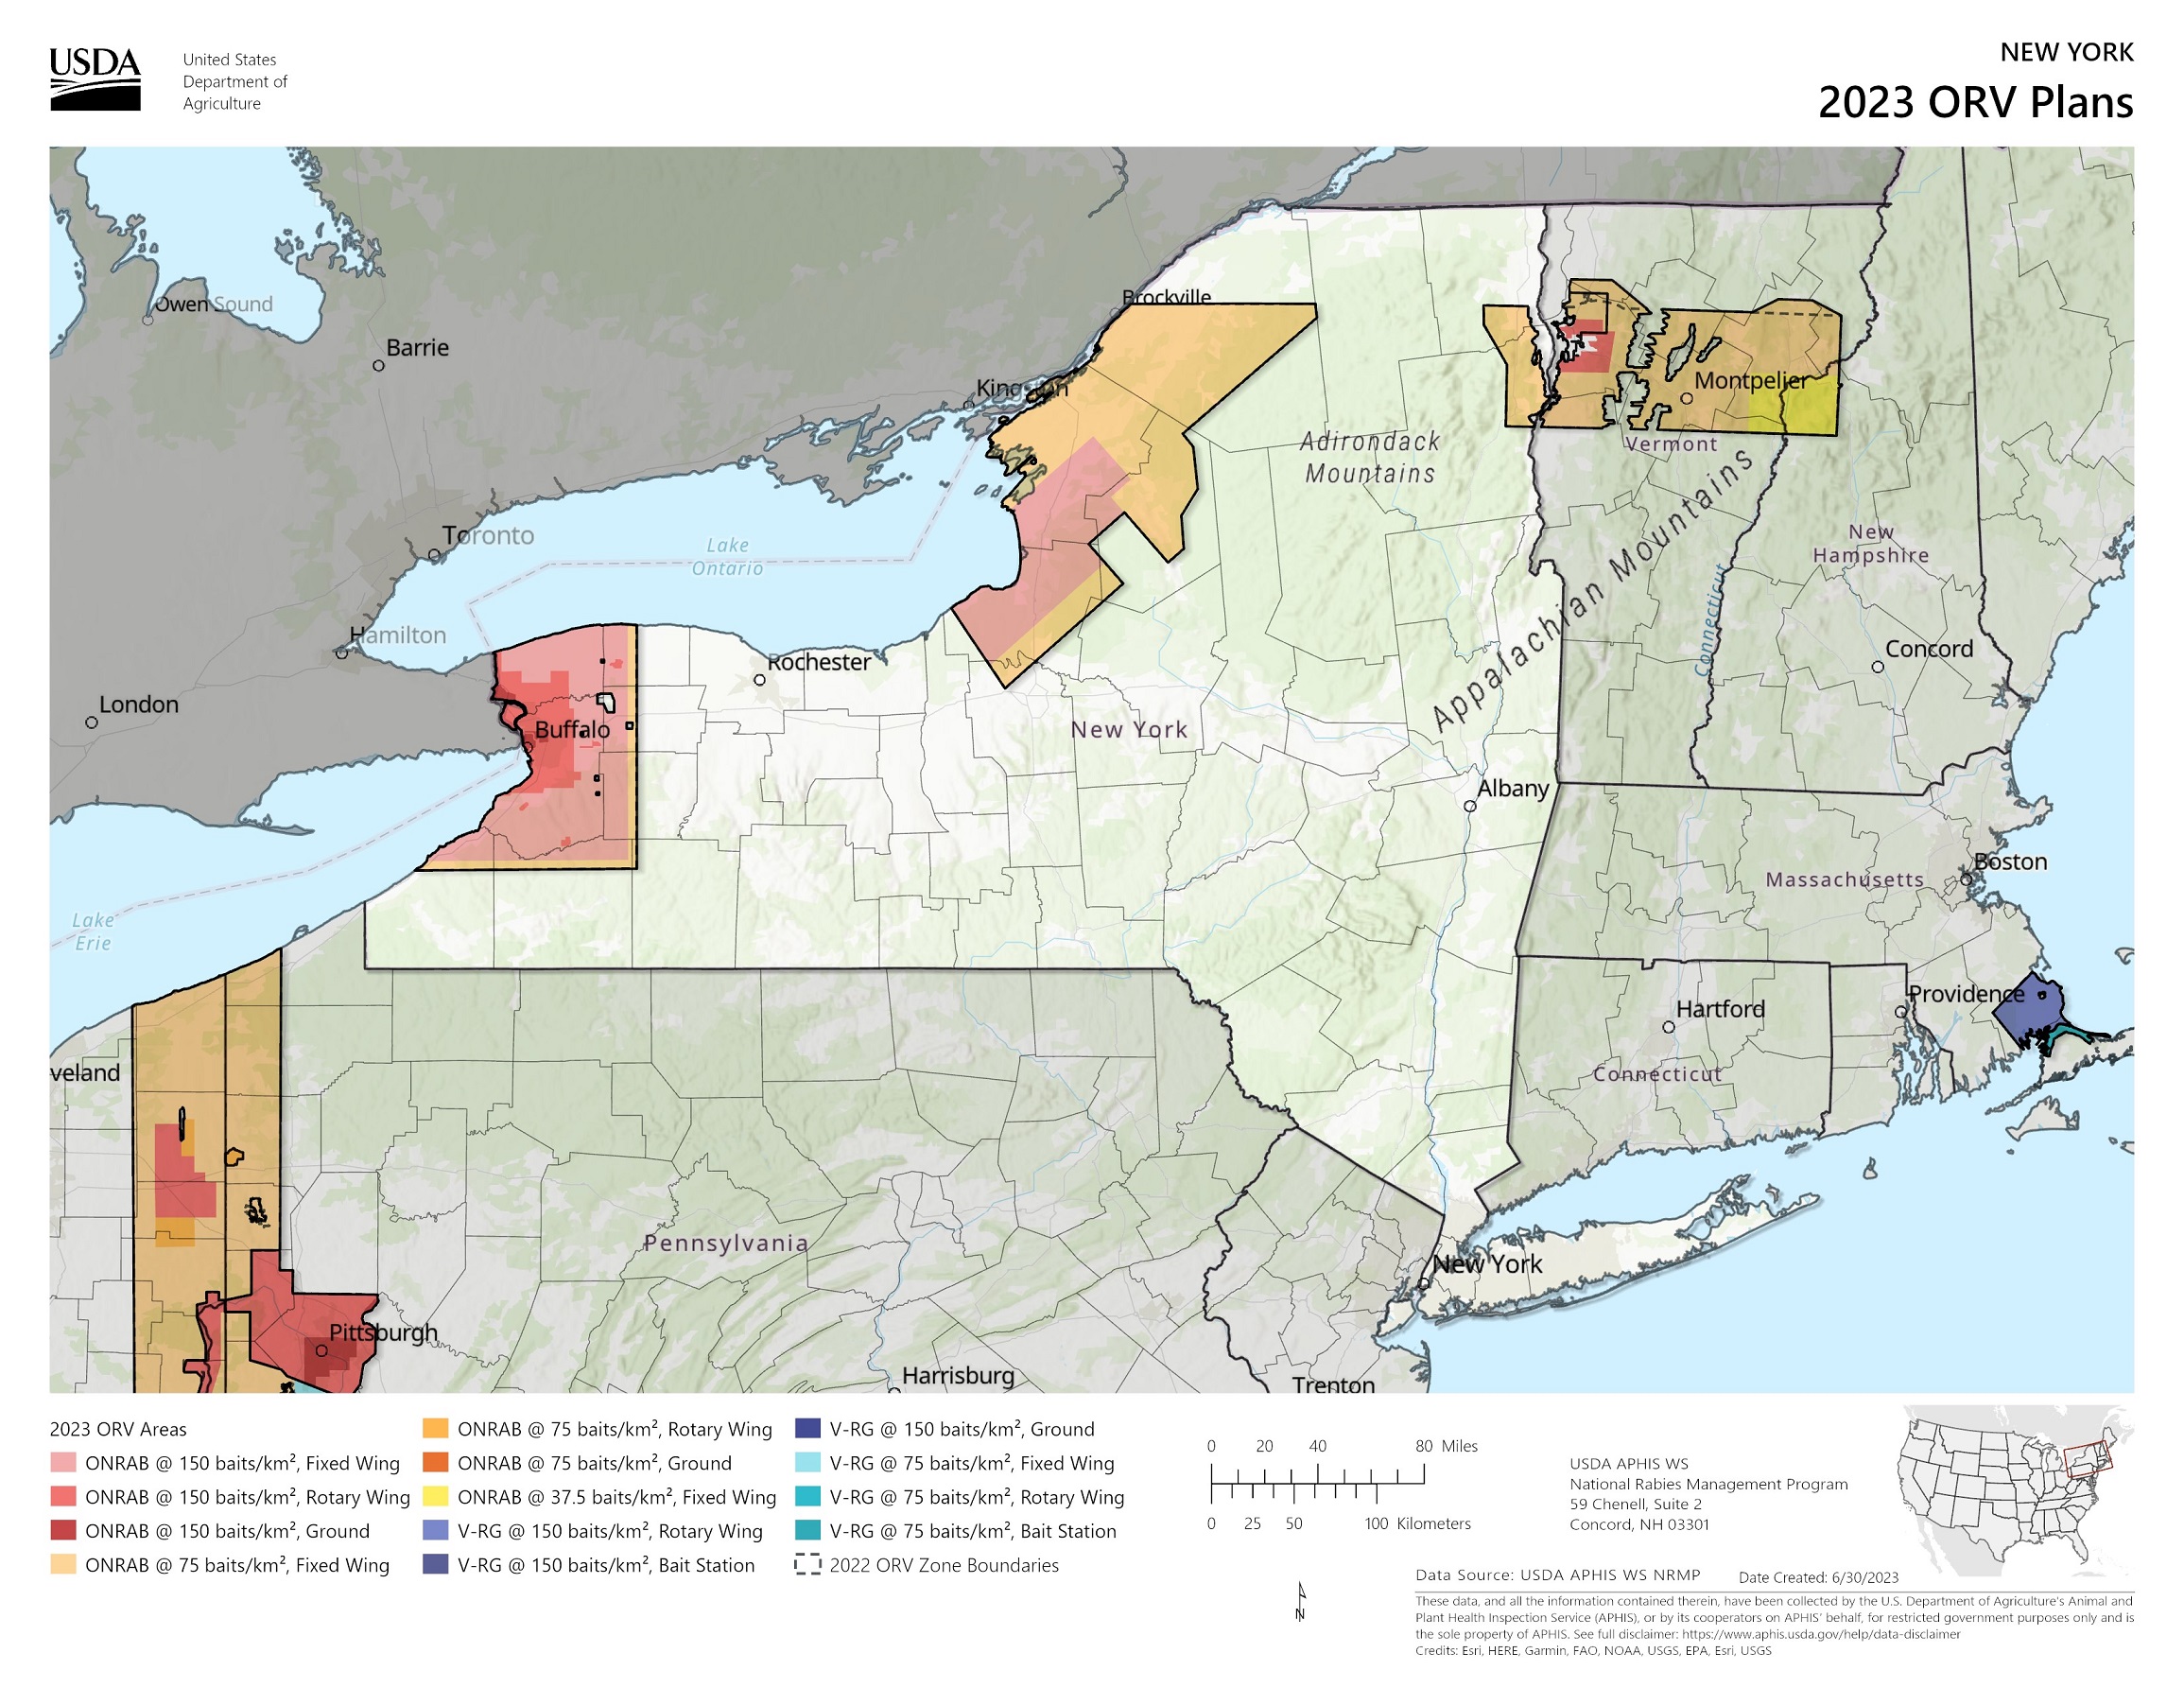 Map of distribution target areas rabies drop